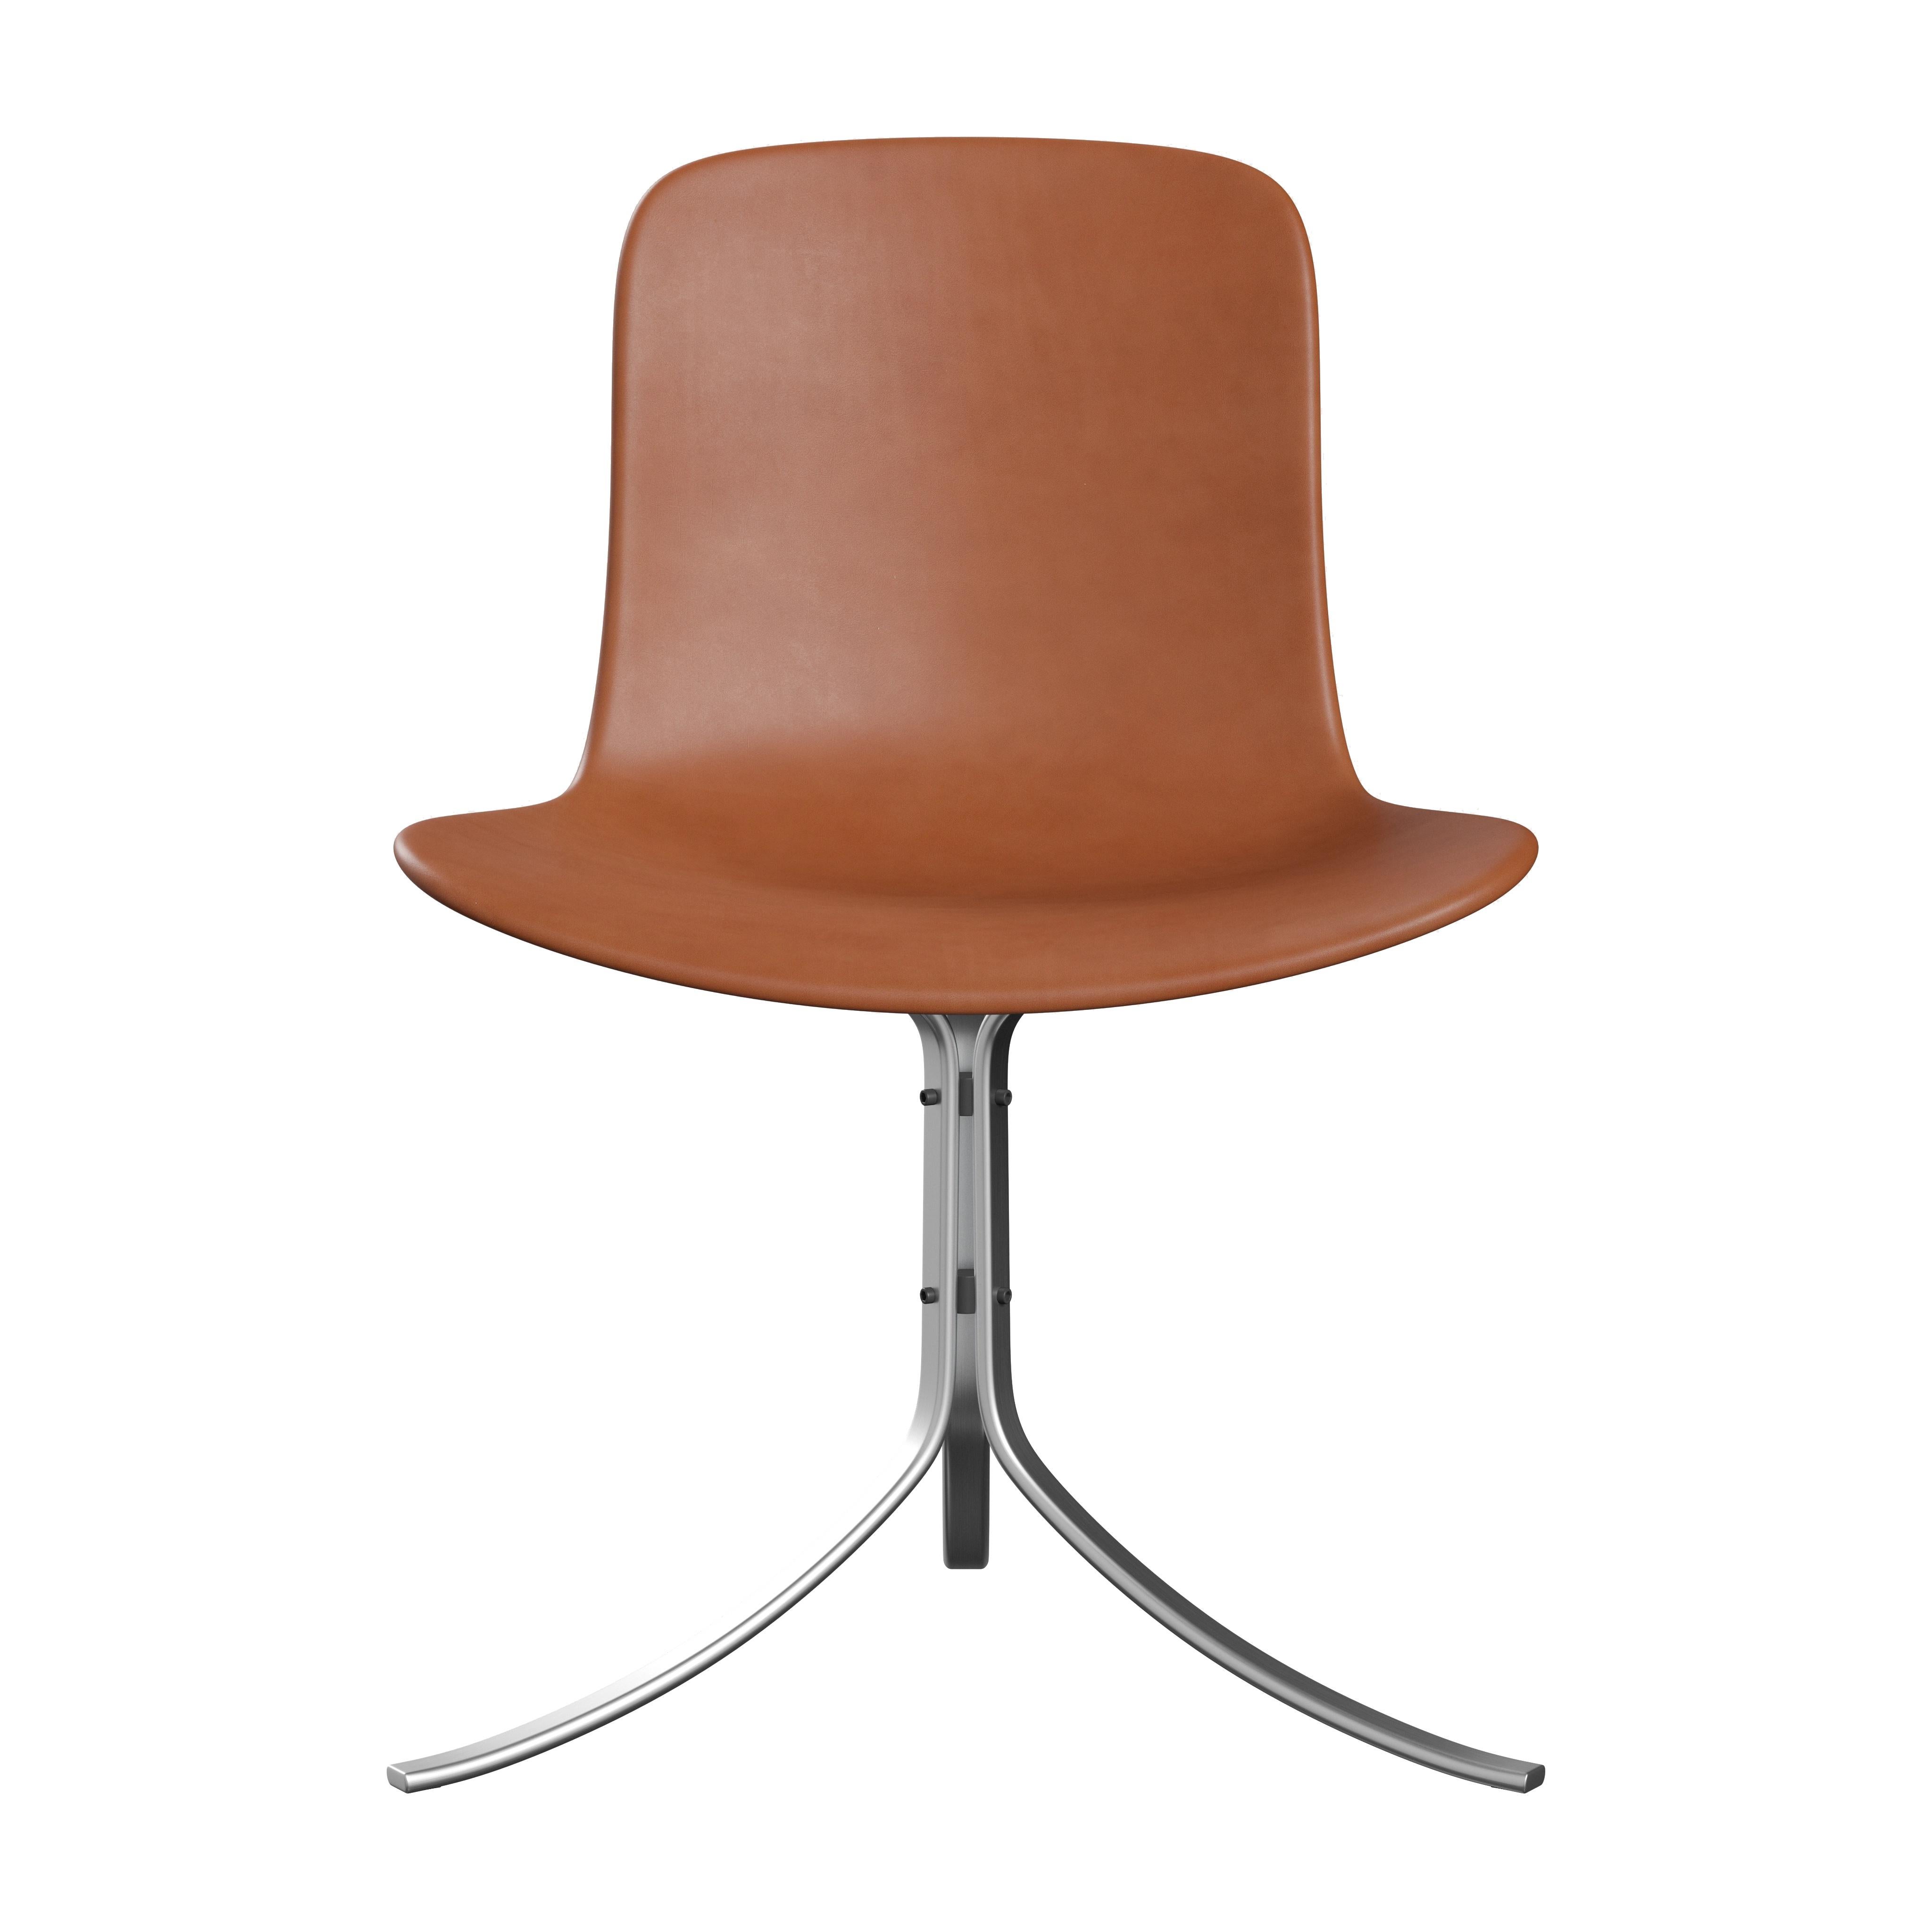 Poul Kjærholm 'PK9' Dining Chair for Fritz Hansen in Leather (Cat. 5) For Sale 7